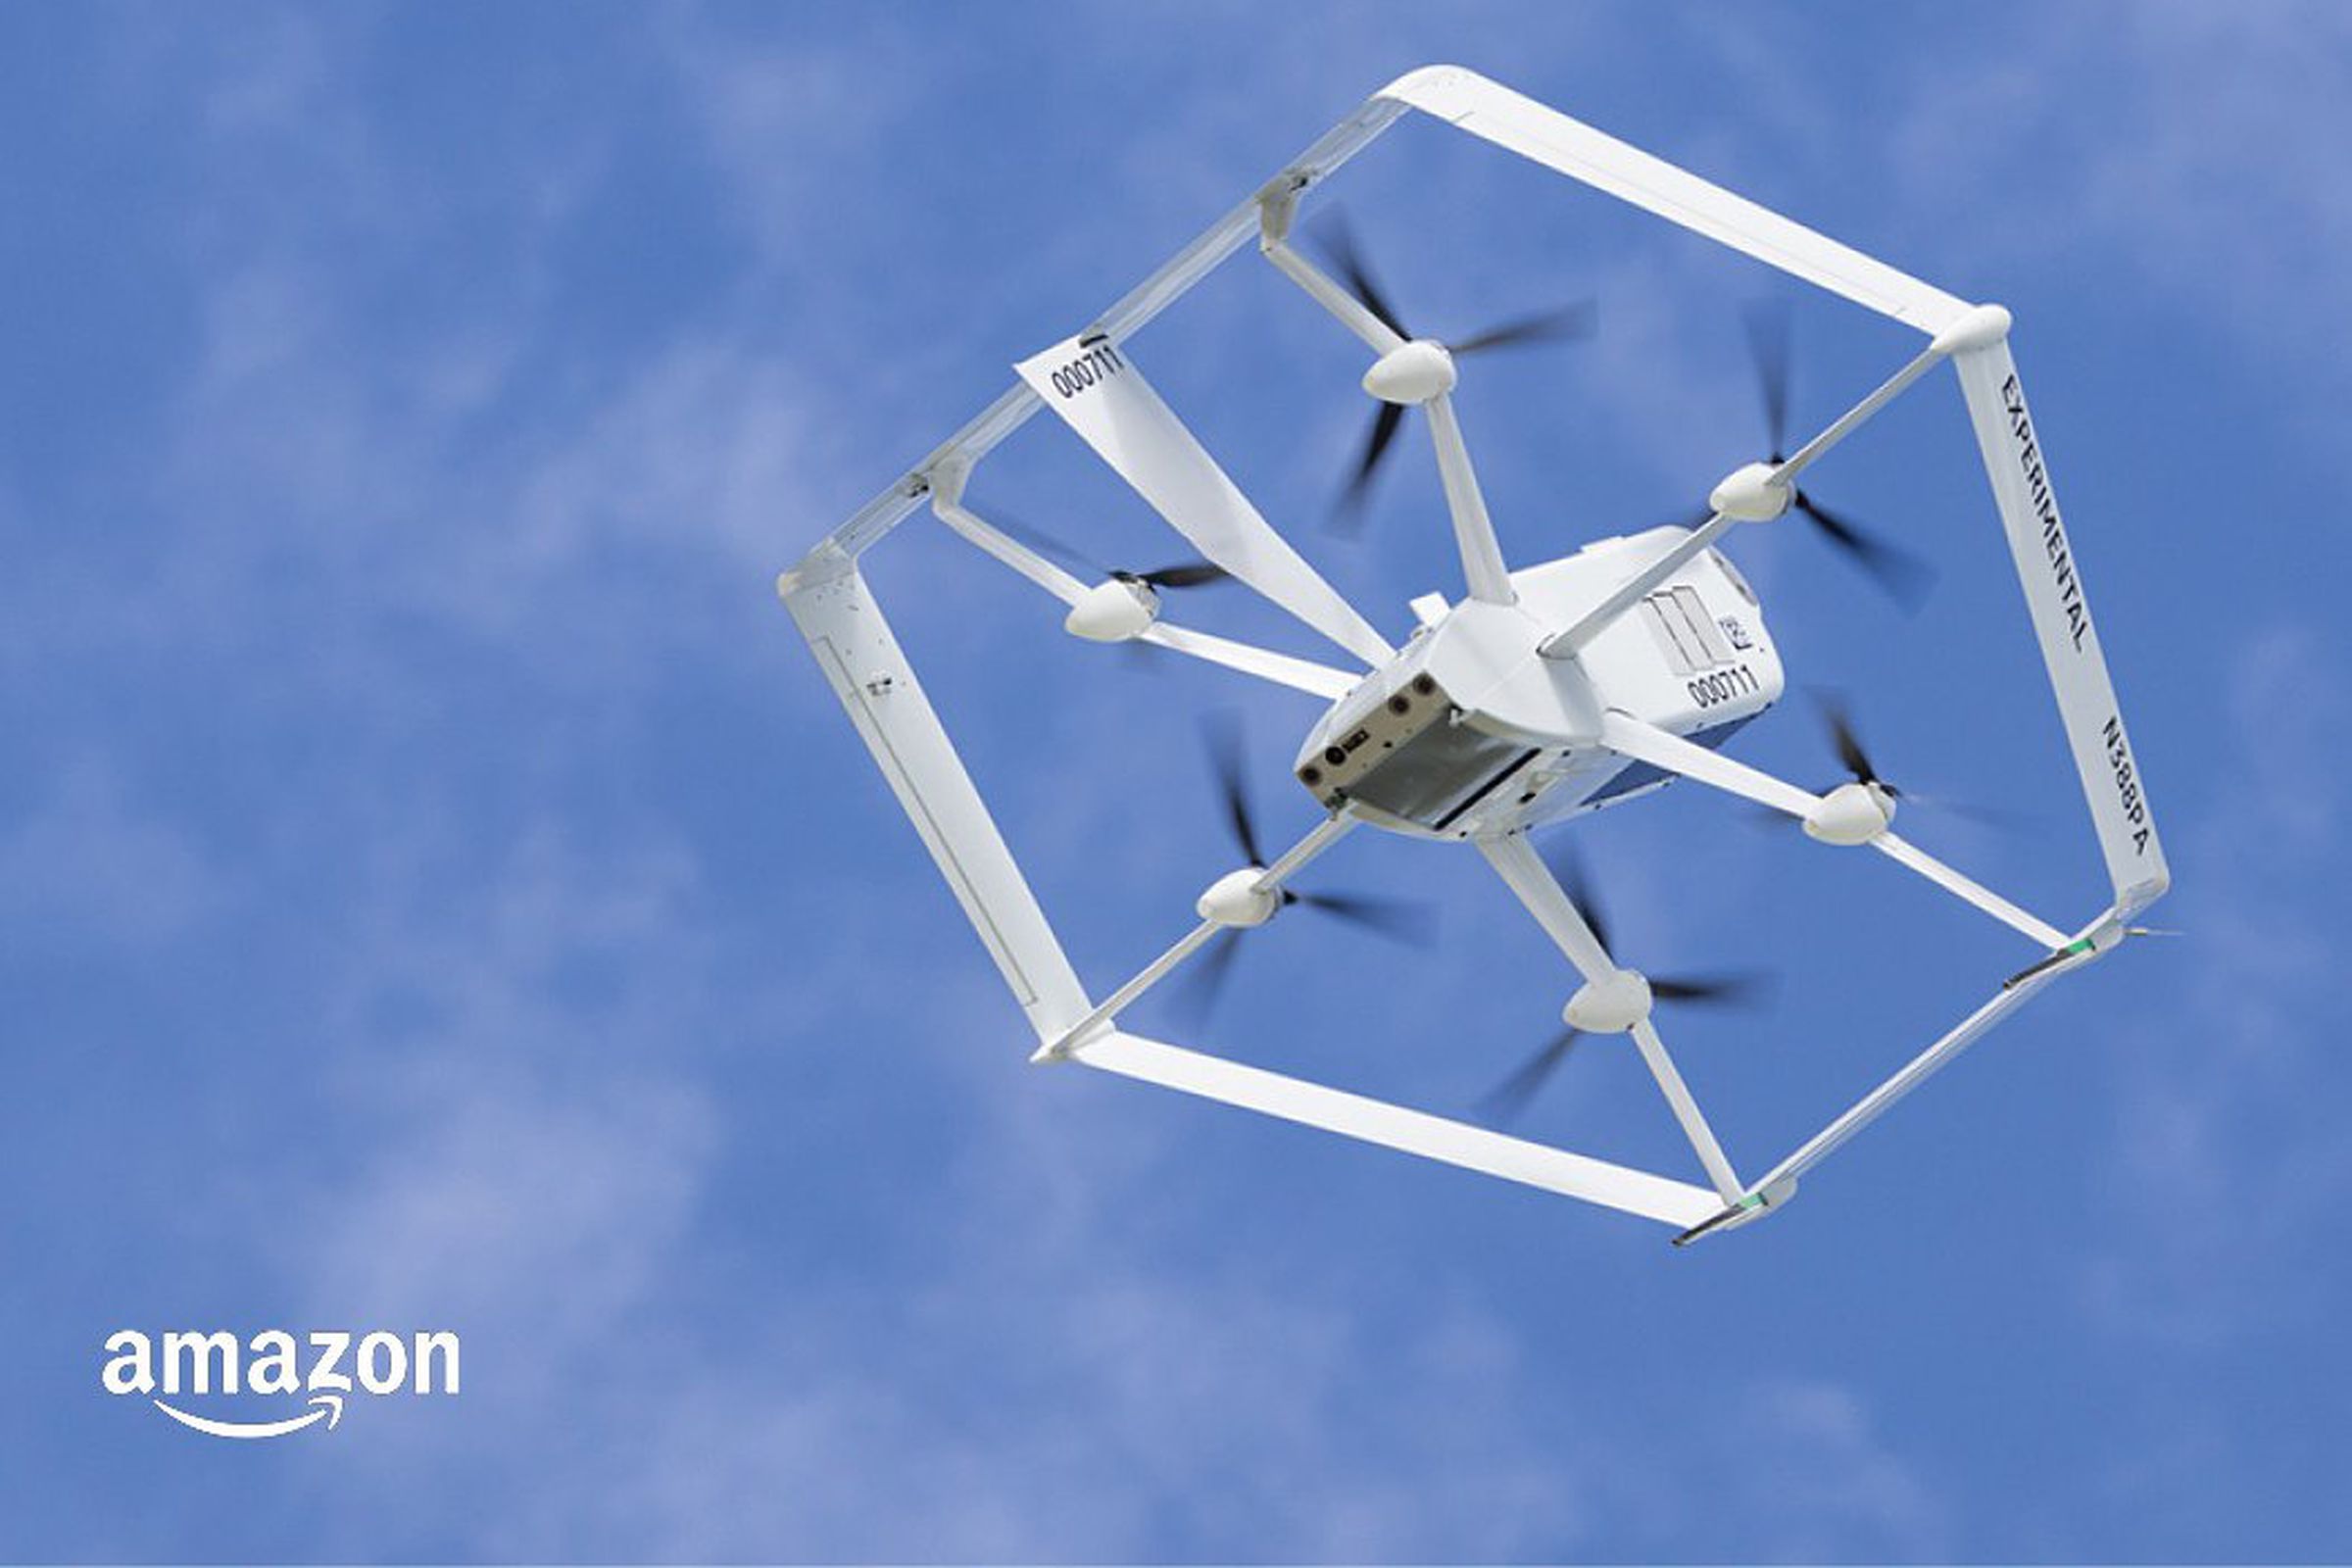 Amazon’s hexagonal MK27-2 delivery drone.